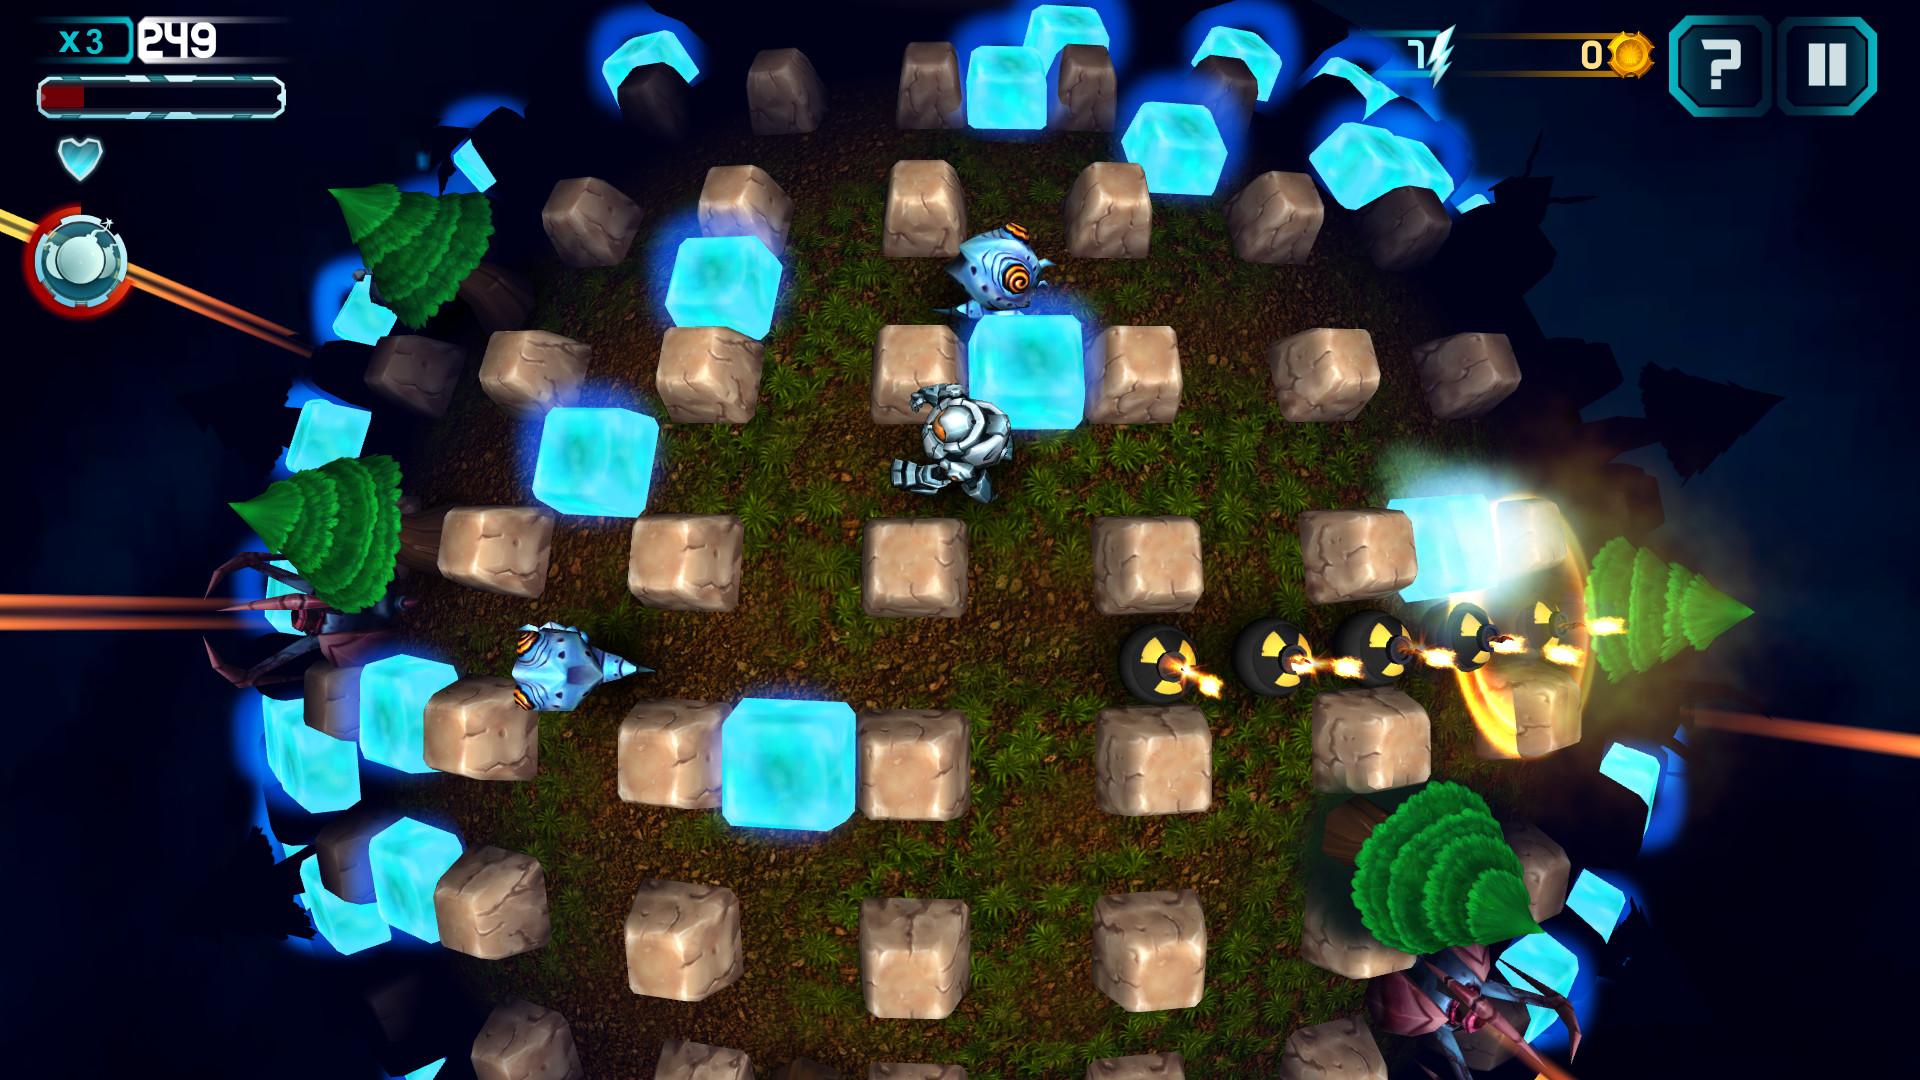 Screenshot №4 from game BomberZone